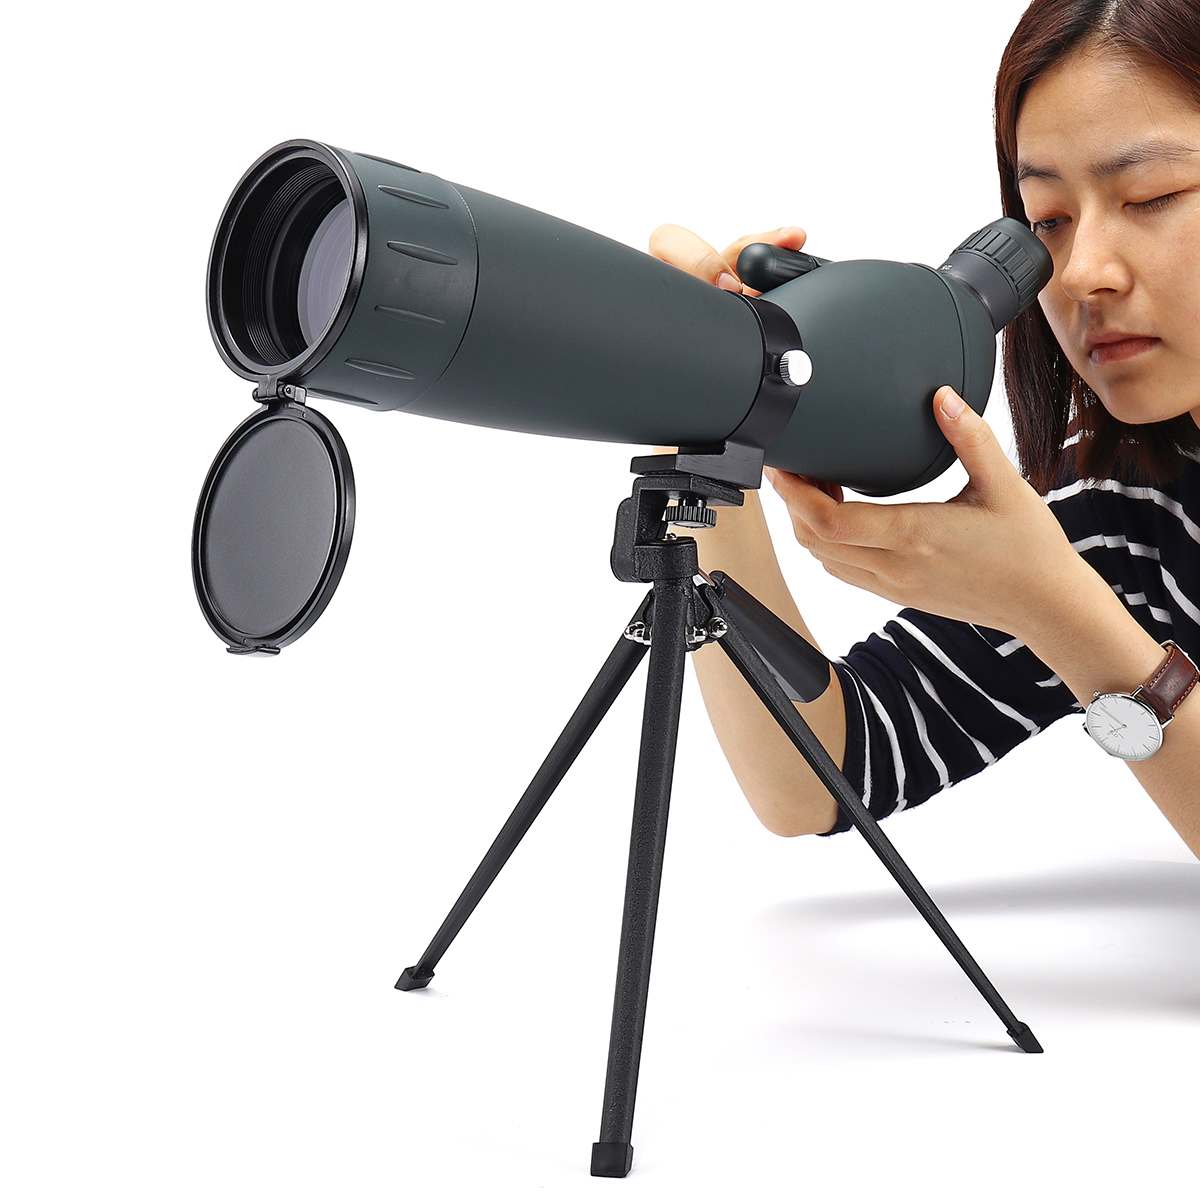 25-75X75 HD Zoom Spotting Scope Telescope Birdwatch Hunting Monocular Day Night Vision Waterproof FMC W/ Tripod Phone Adapter